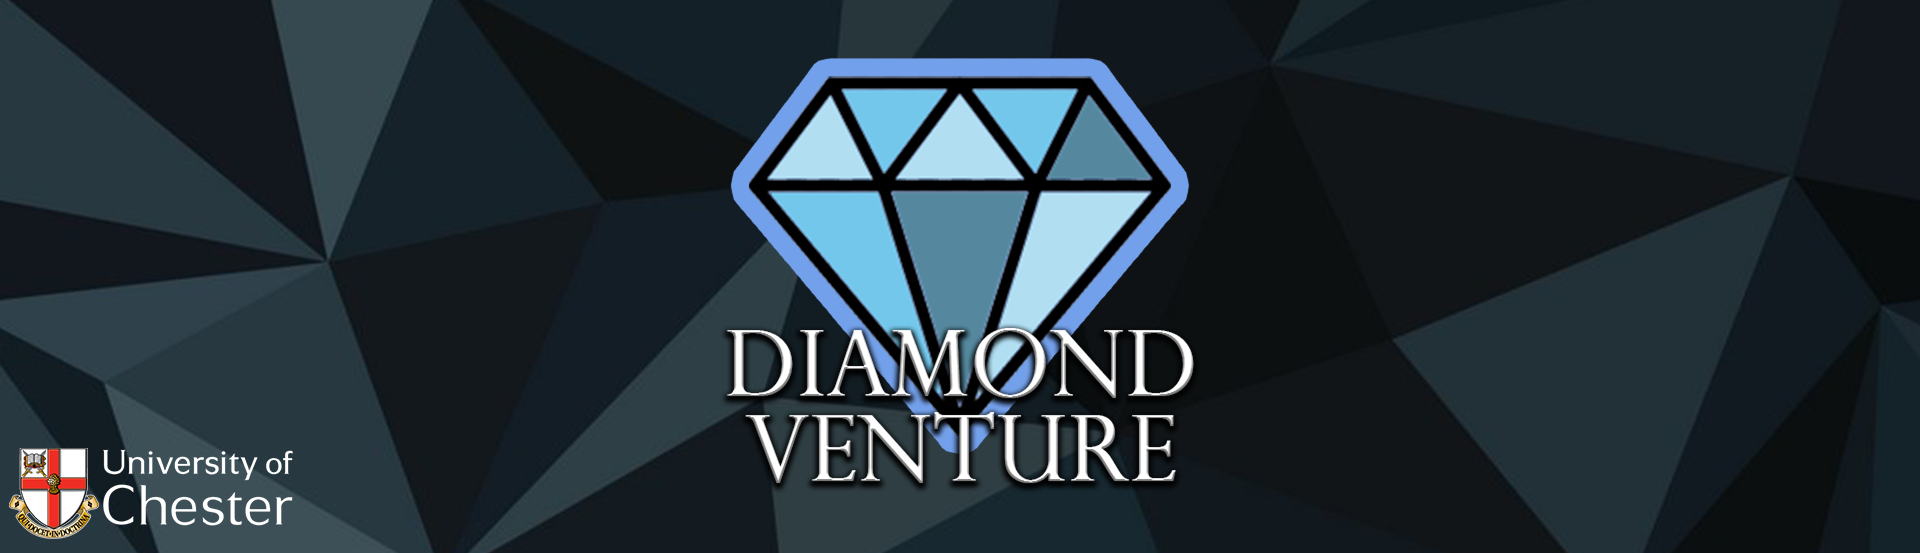 Diamond Venture